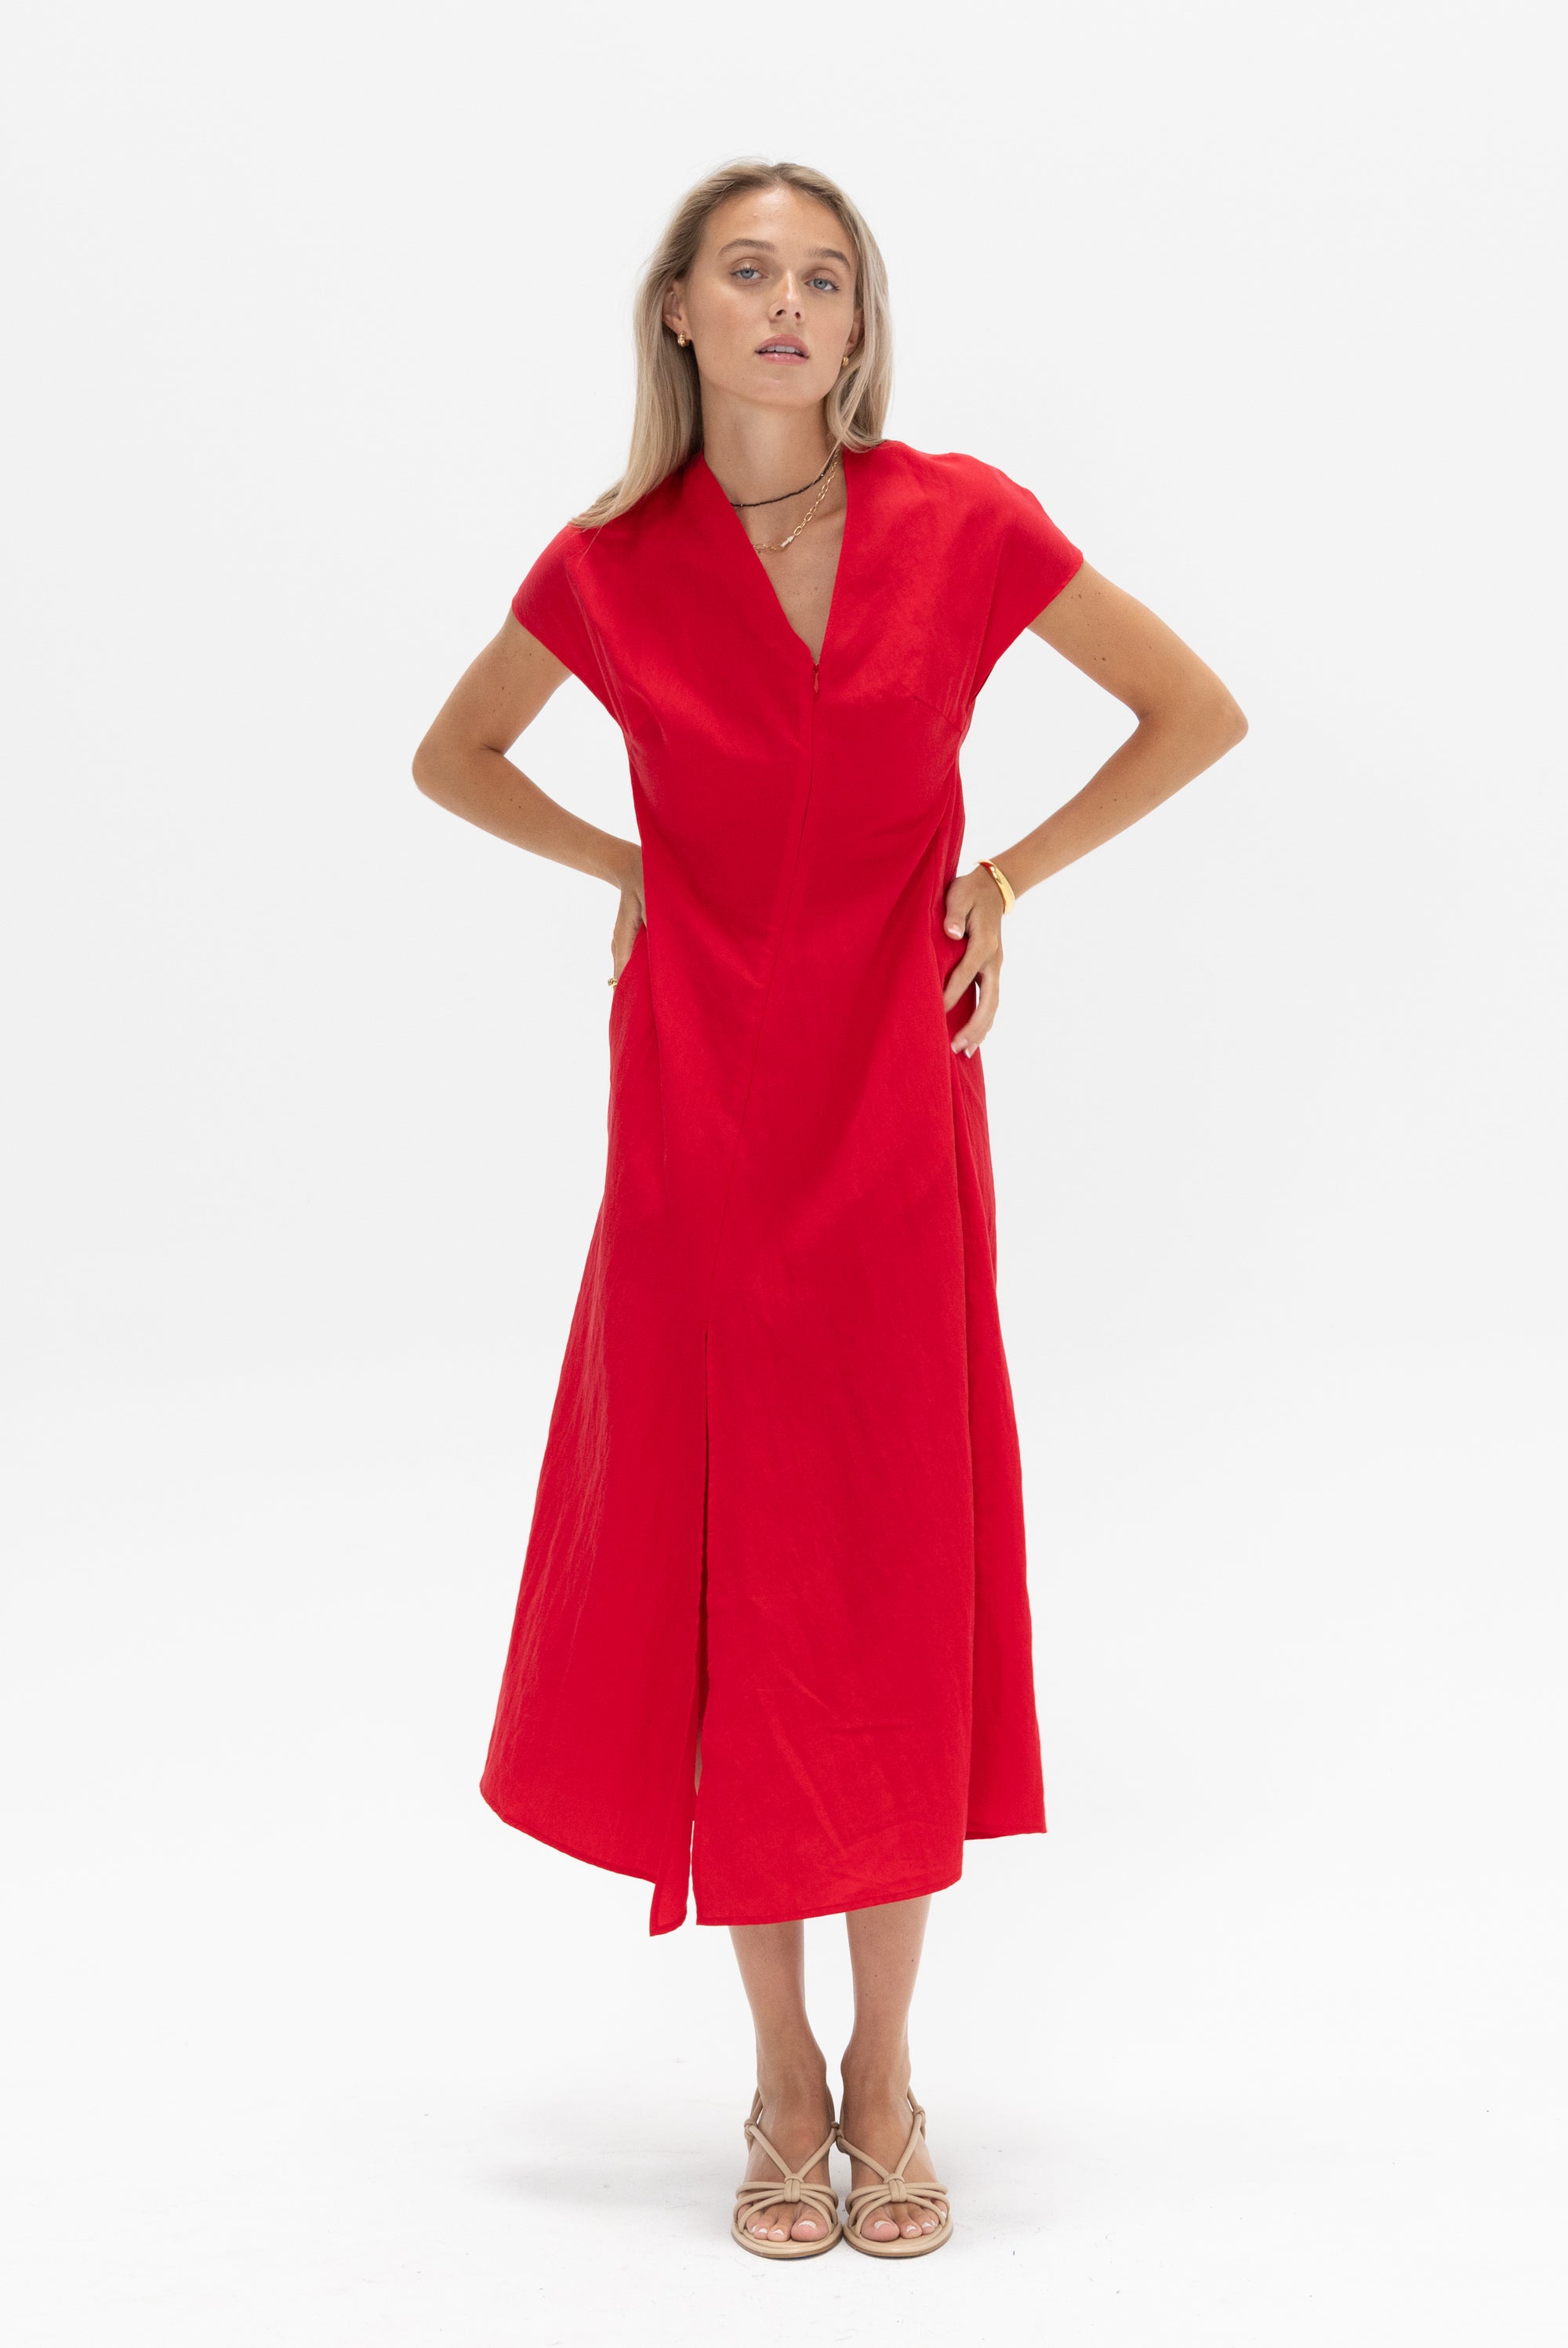 ZERO + MARIA CORNEJO - Long Silent Dress, Red